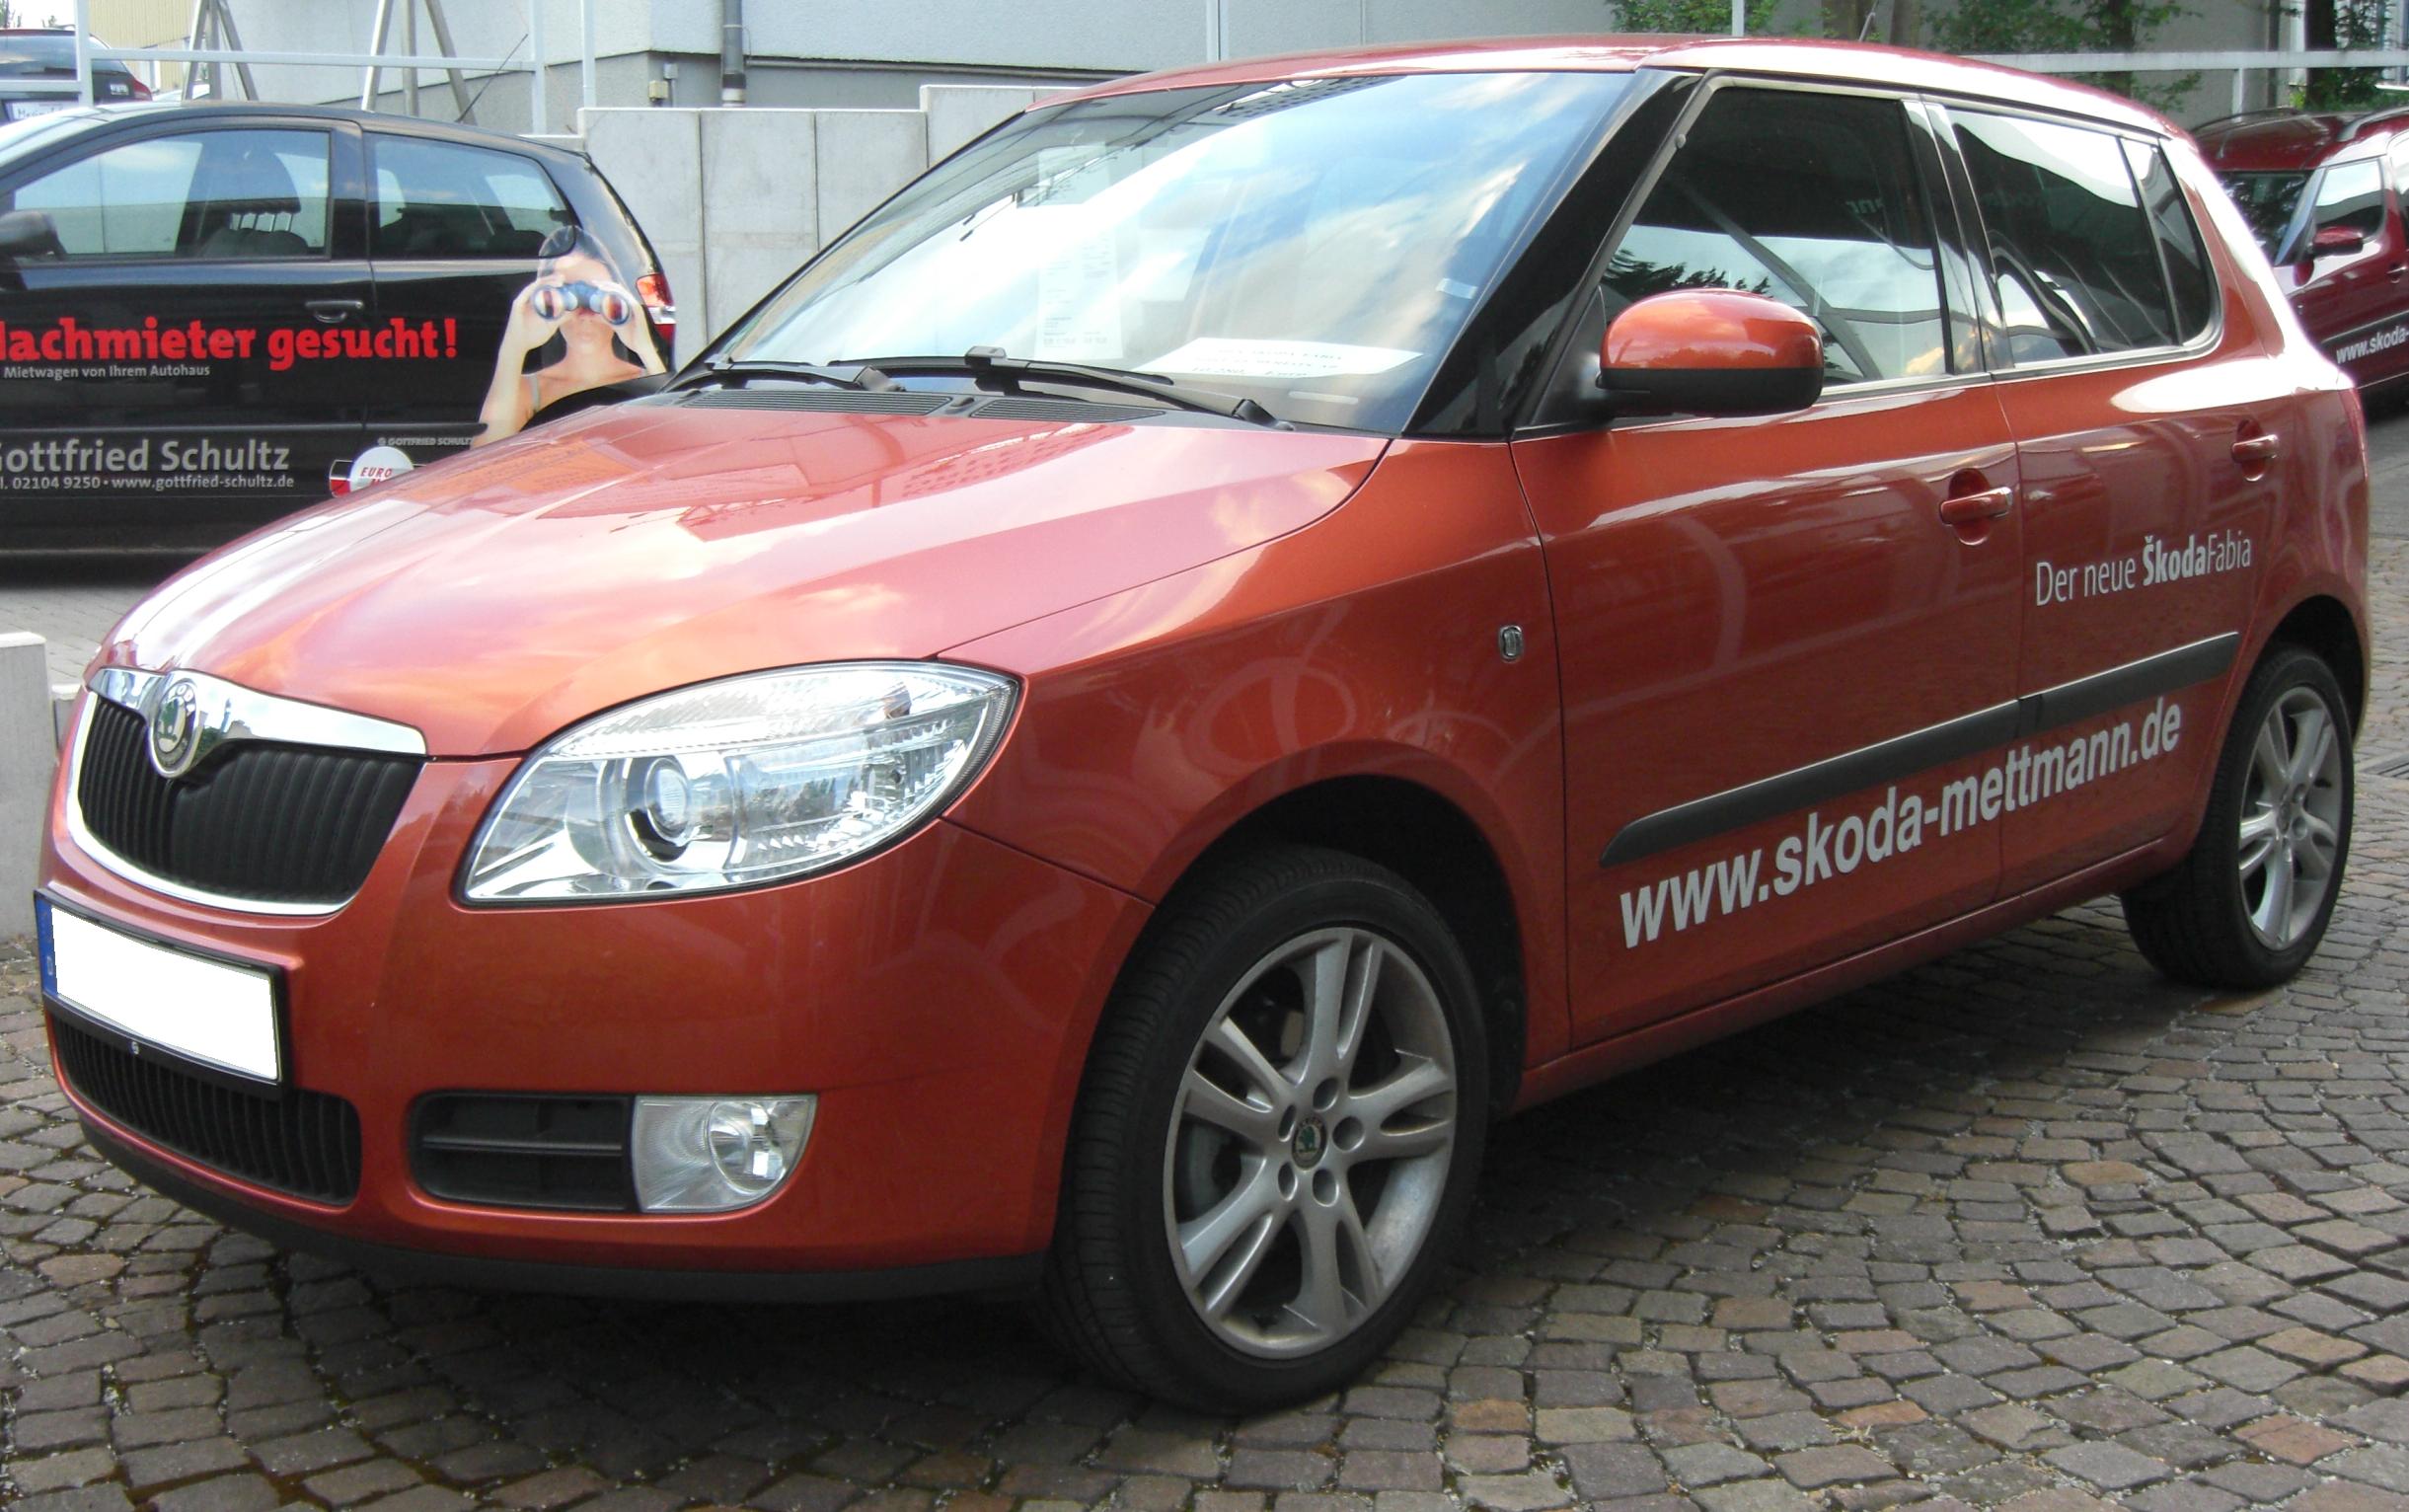 File:Škoda Fabia II 20090314 front.jpg - Wikipedia